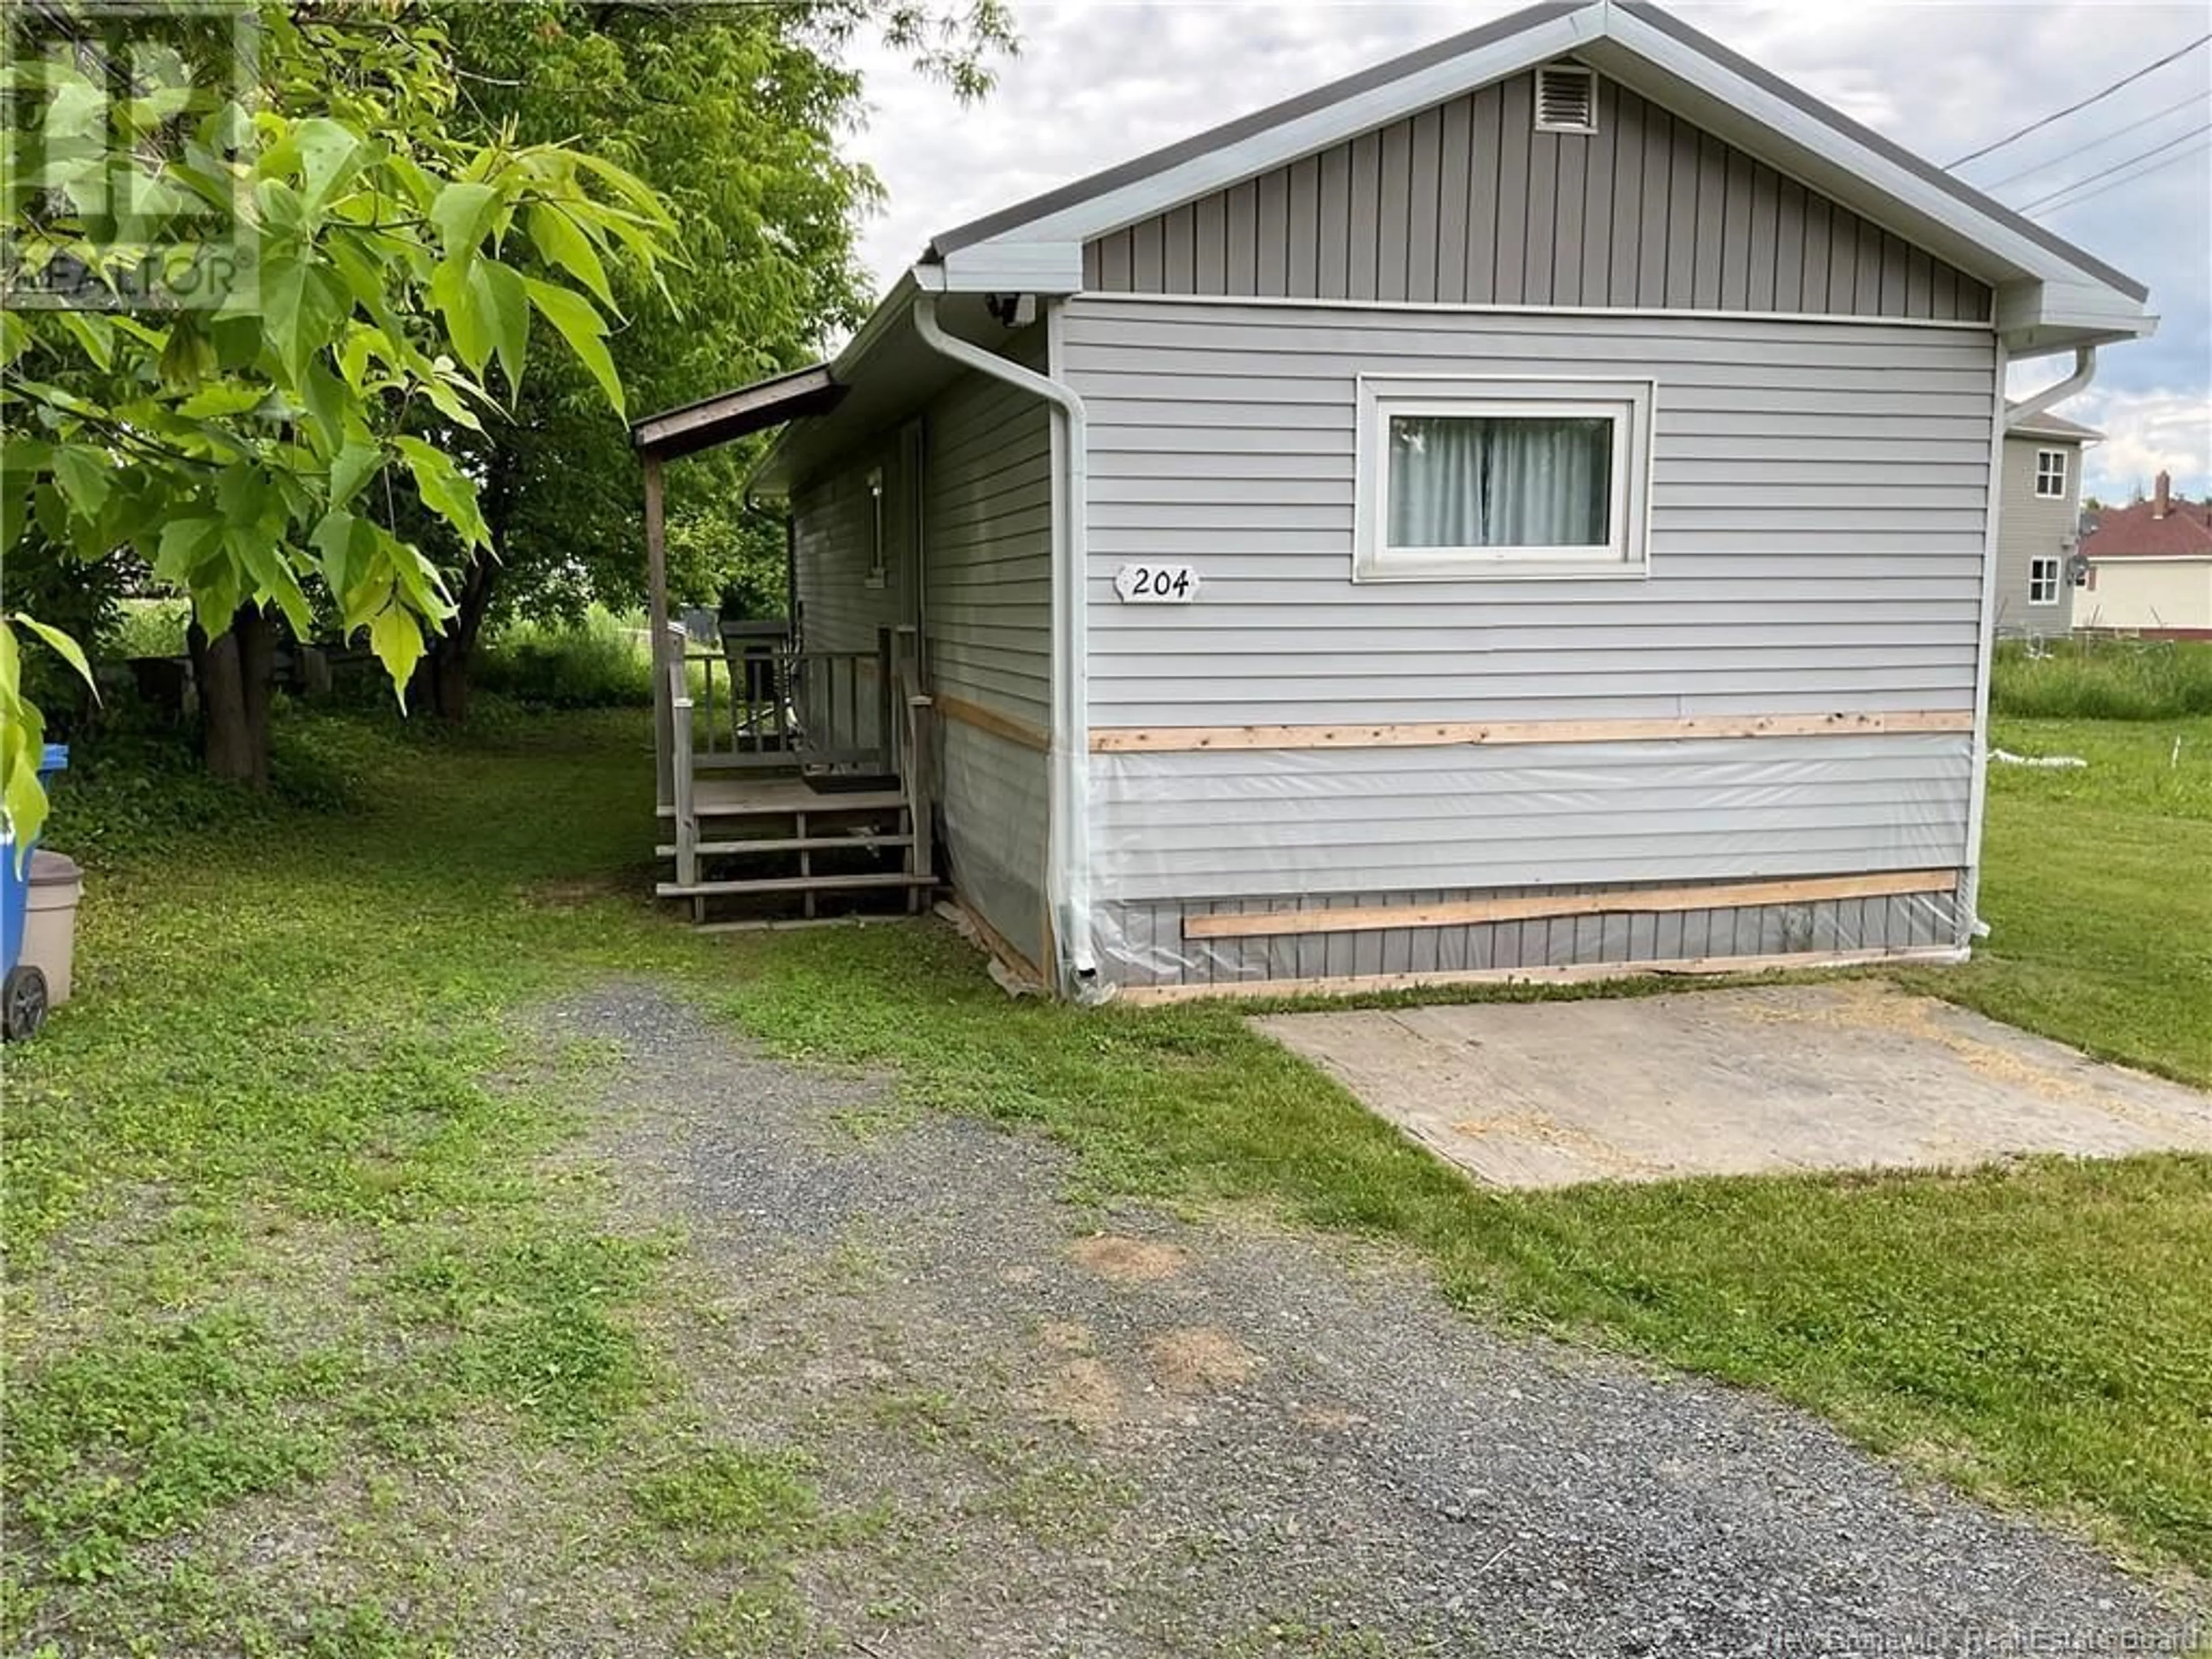 Cottage for 204 Union Street, Woodstock New Brunswick E7M2X5